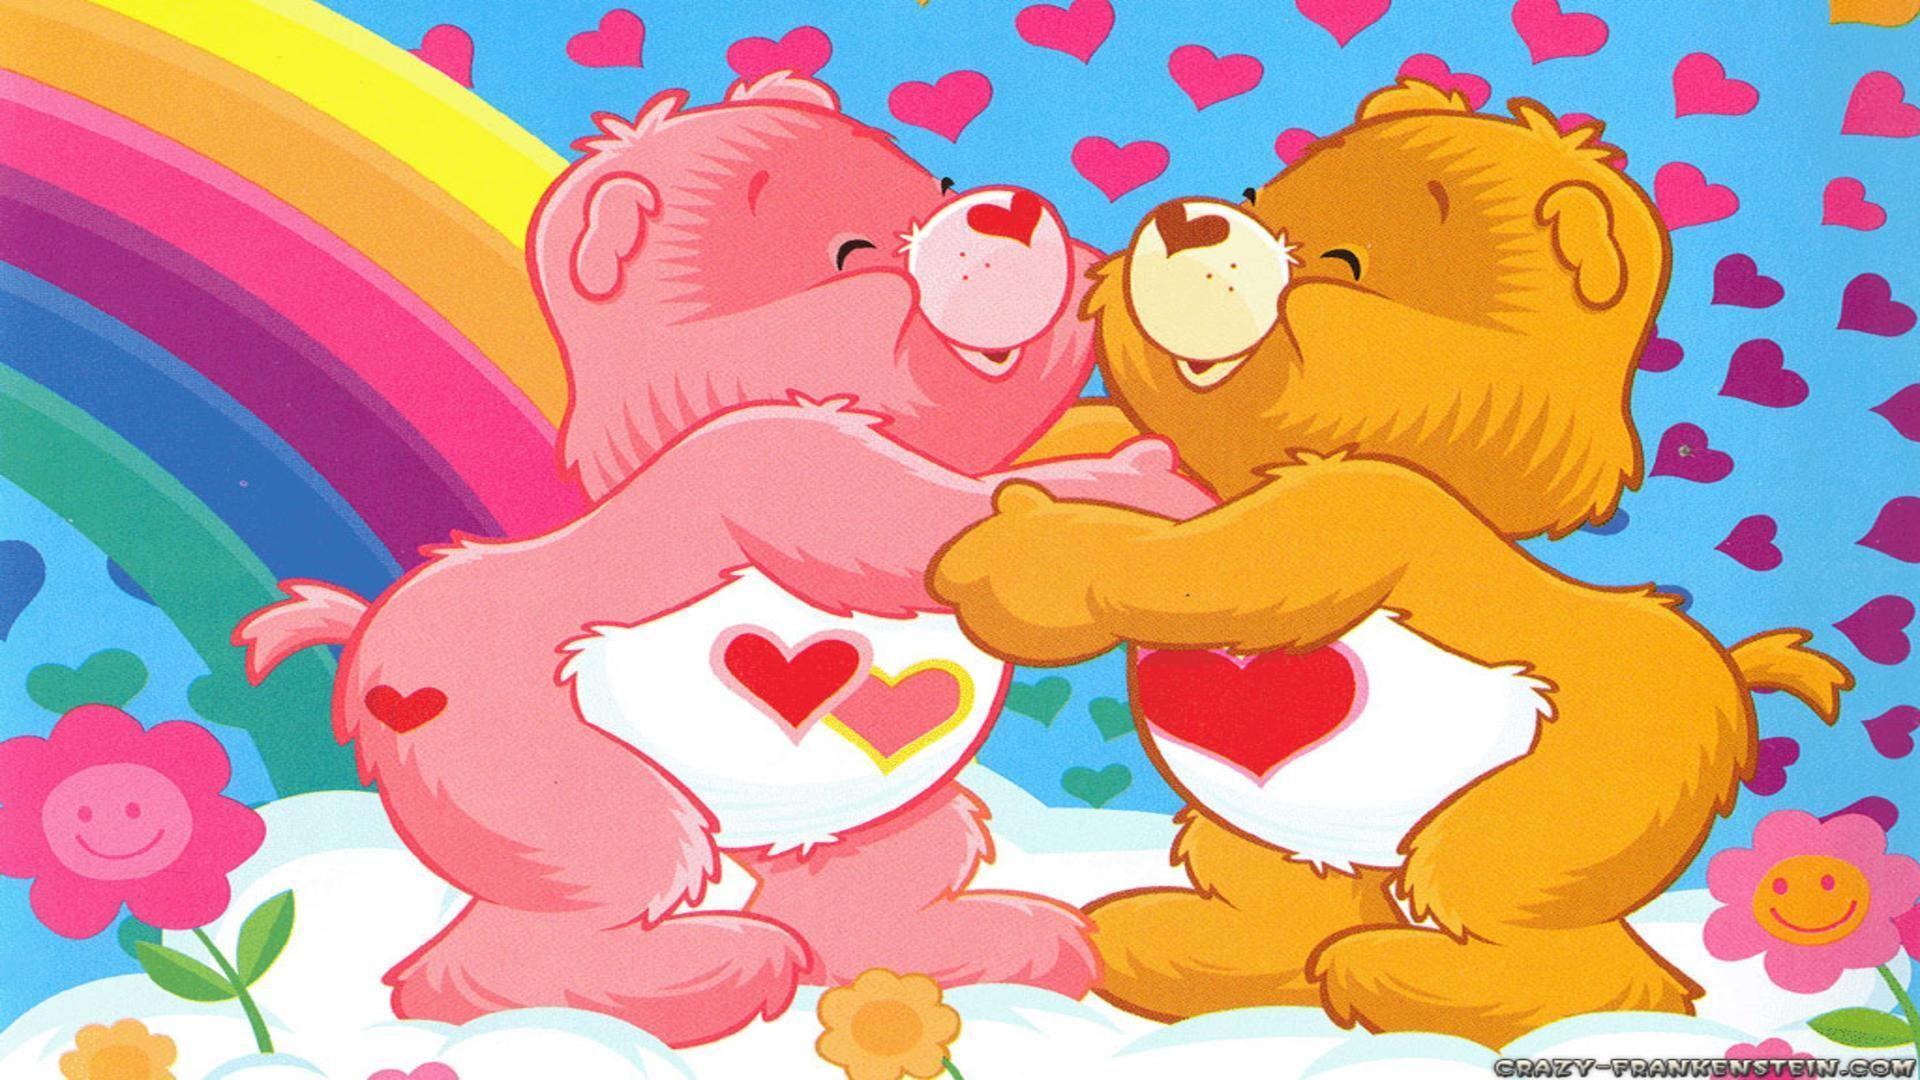 Care bears love wallpaper free desktop background